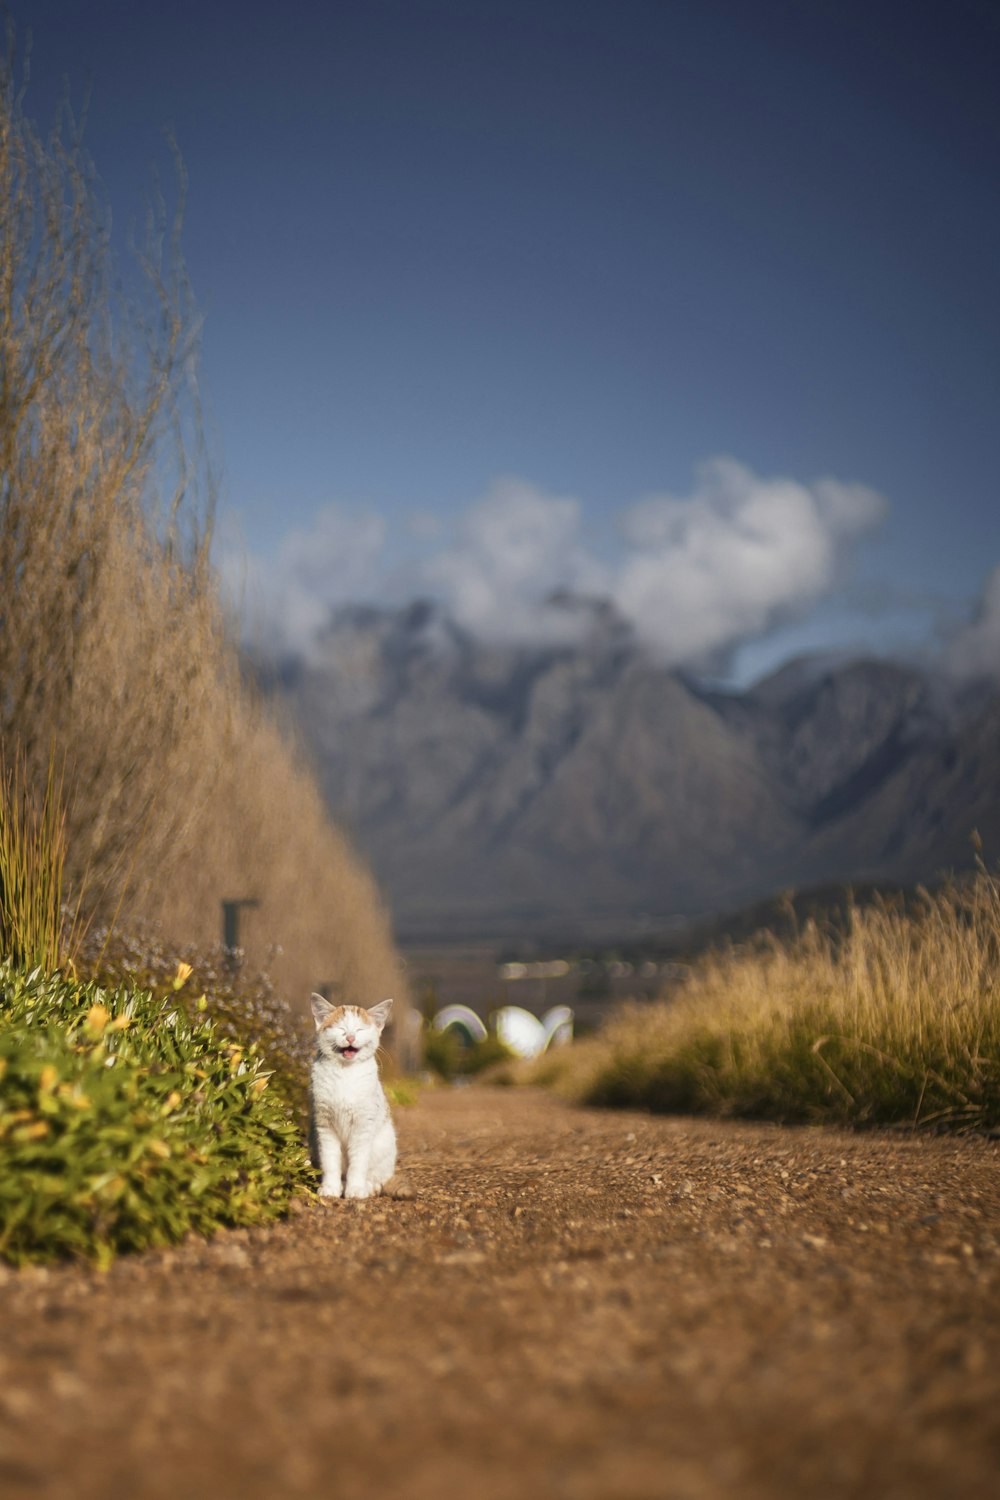 a cat walking on a dirt road